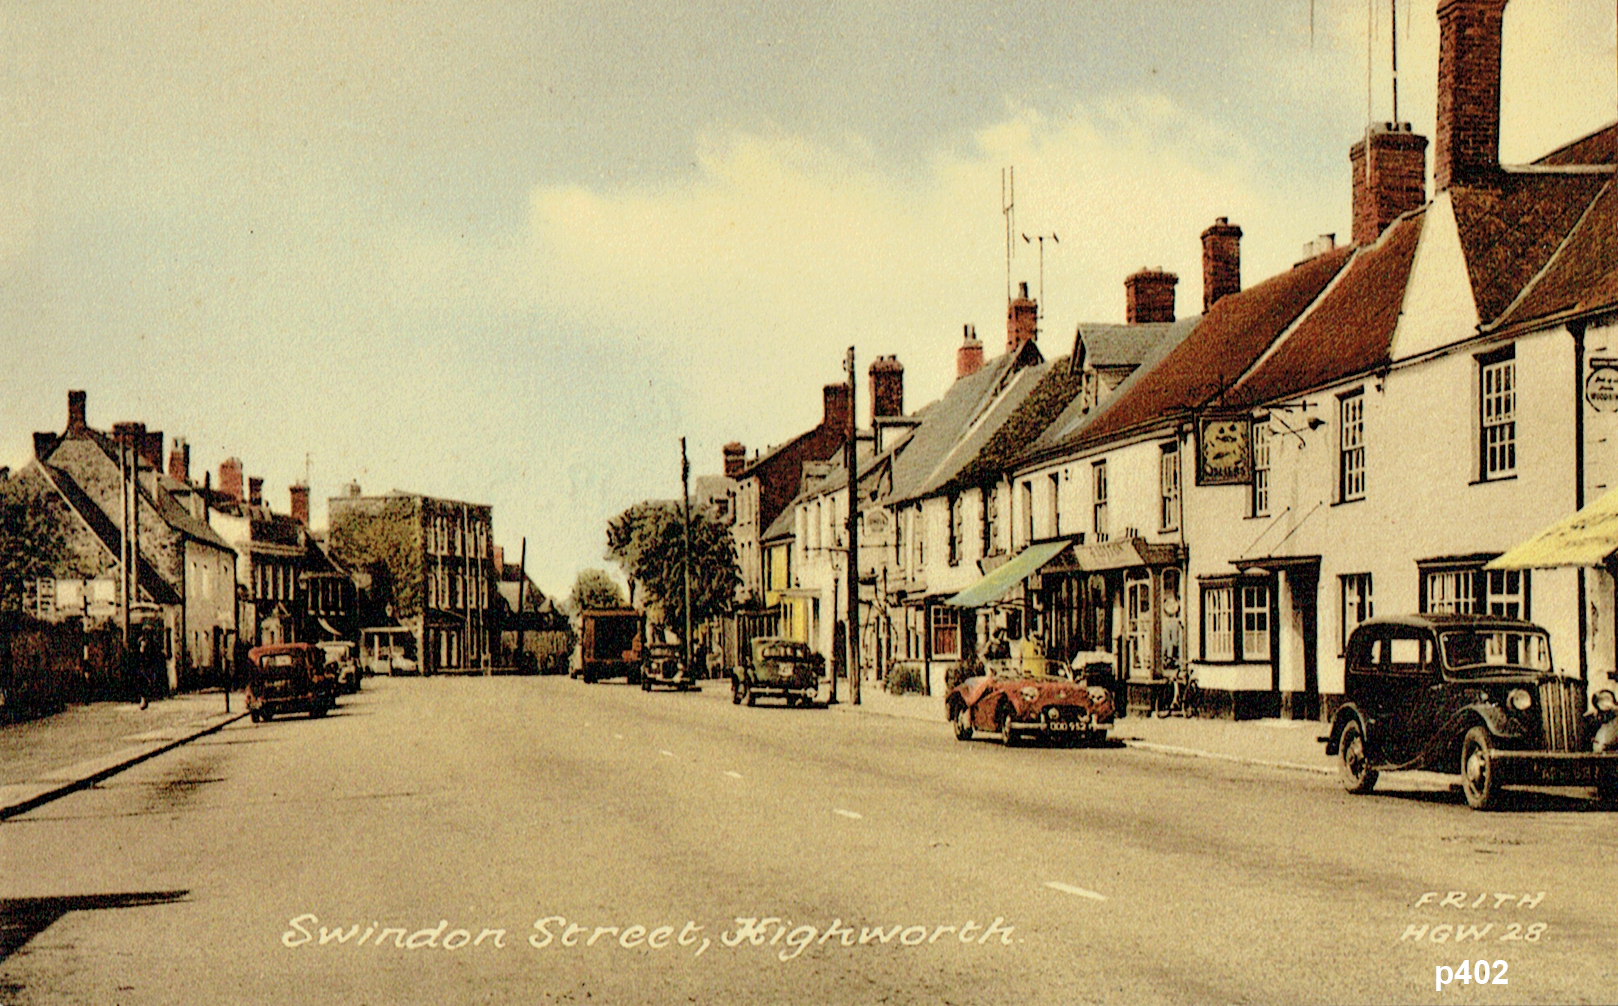 Swindon Street, Highworth